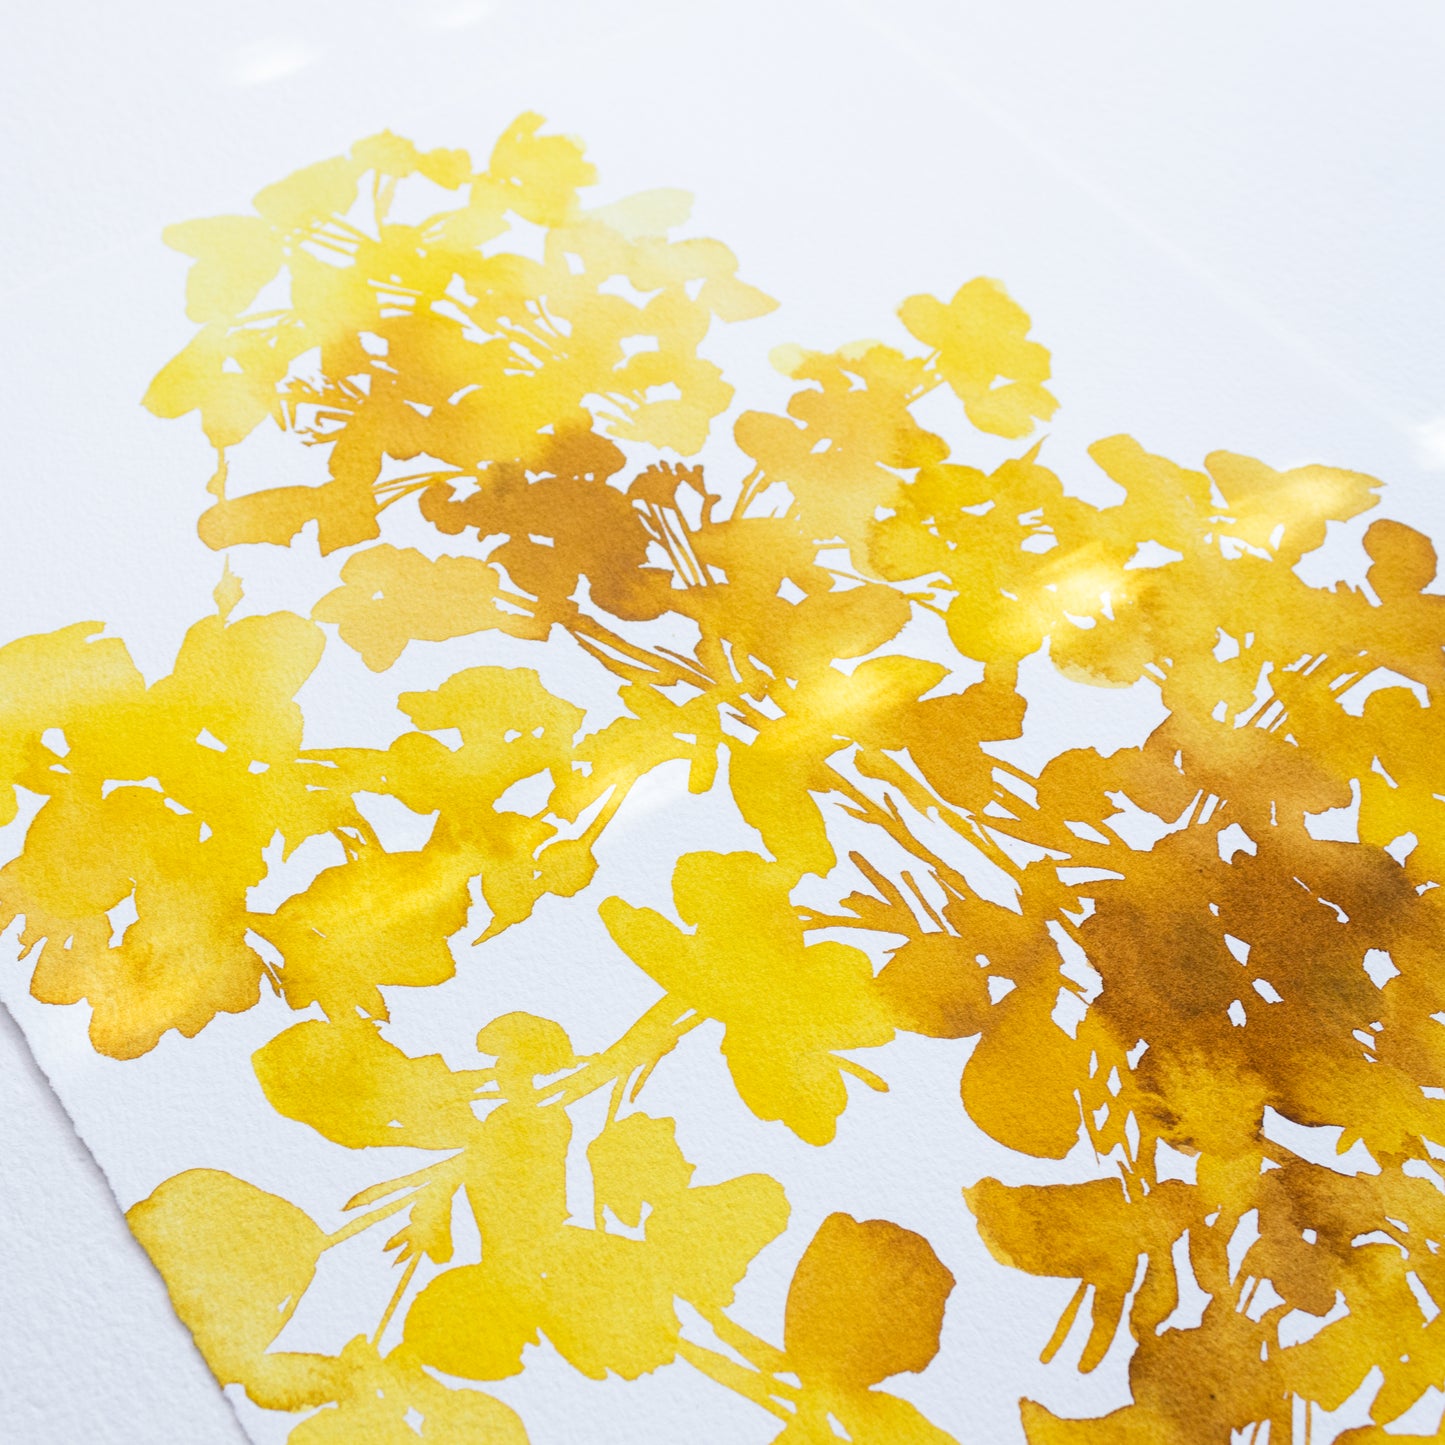 "Marigold Yellow Wildflower Burst" Print